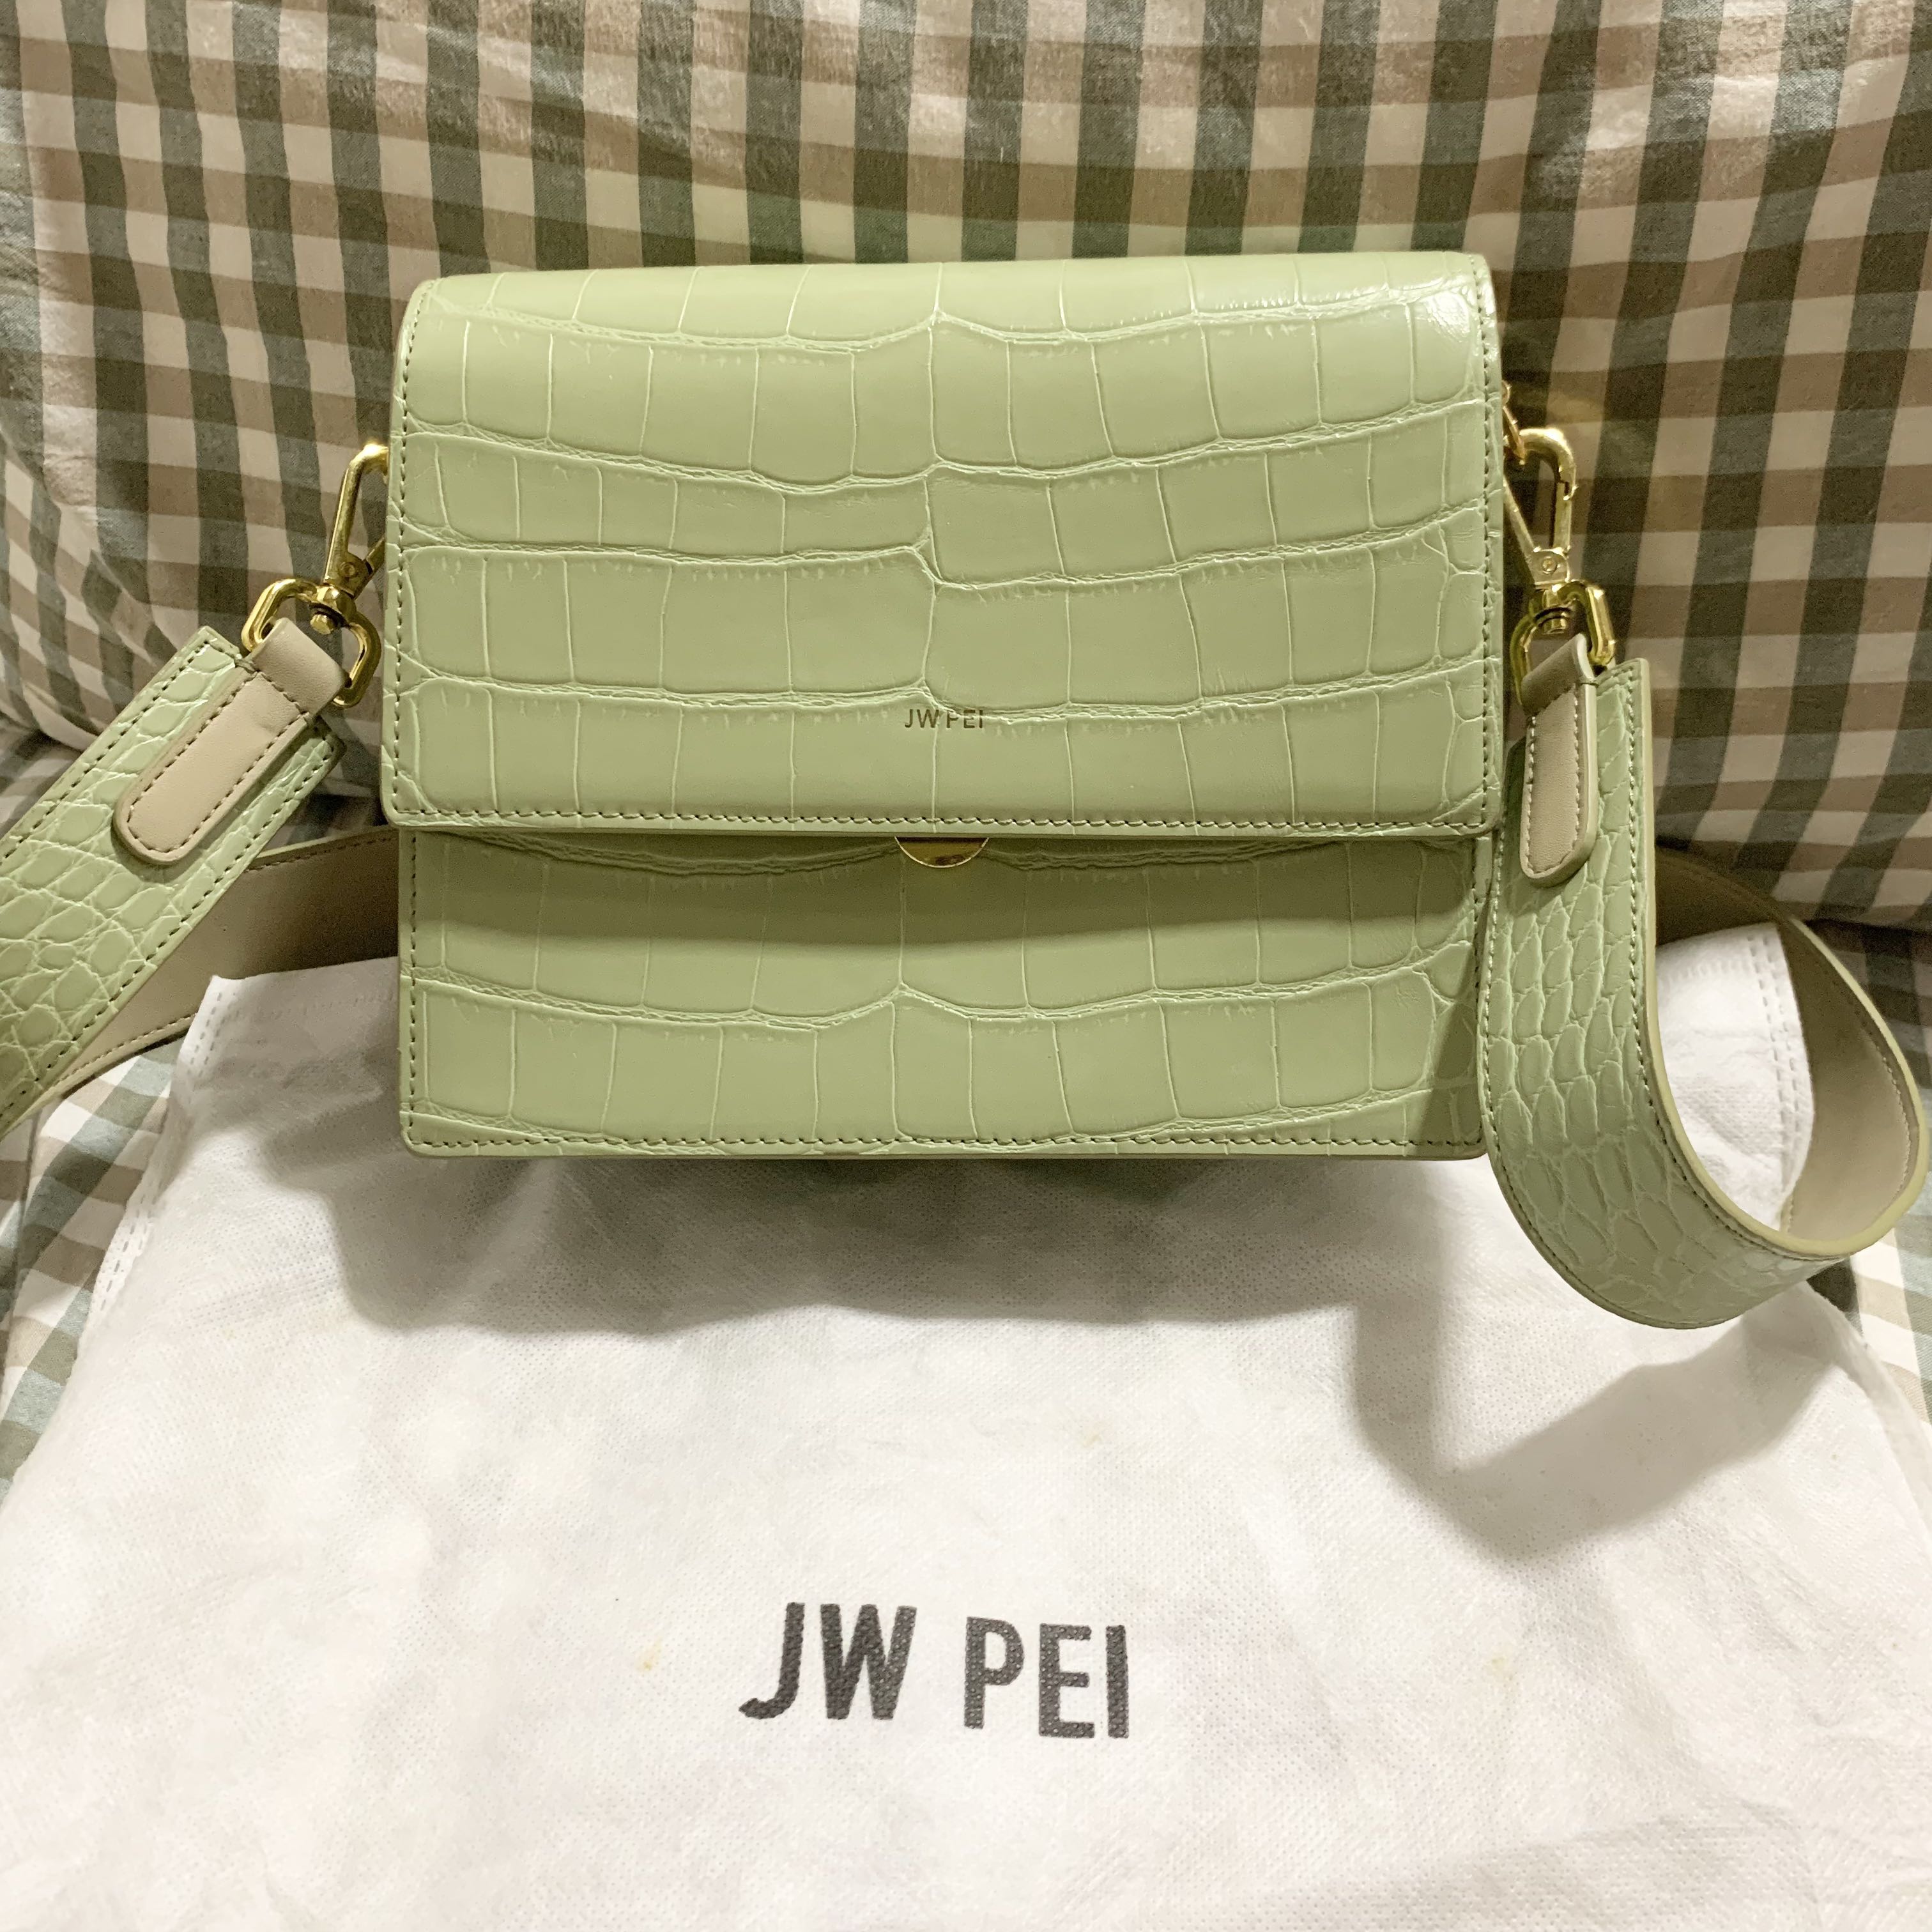 JW PEI, Mini Flap Bag